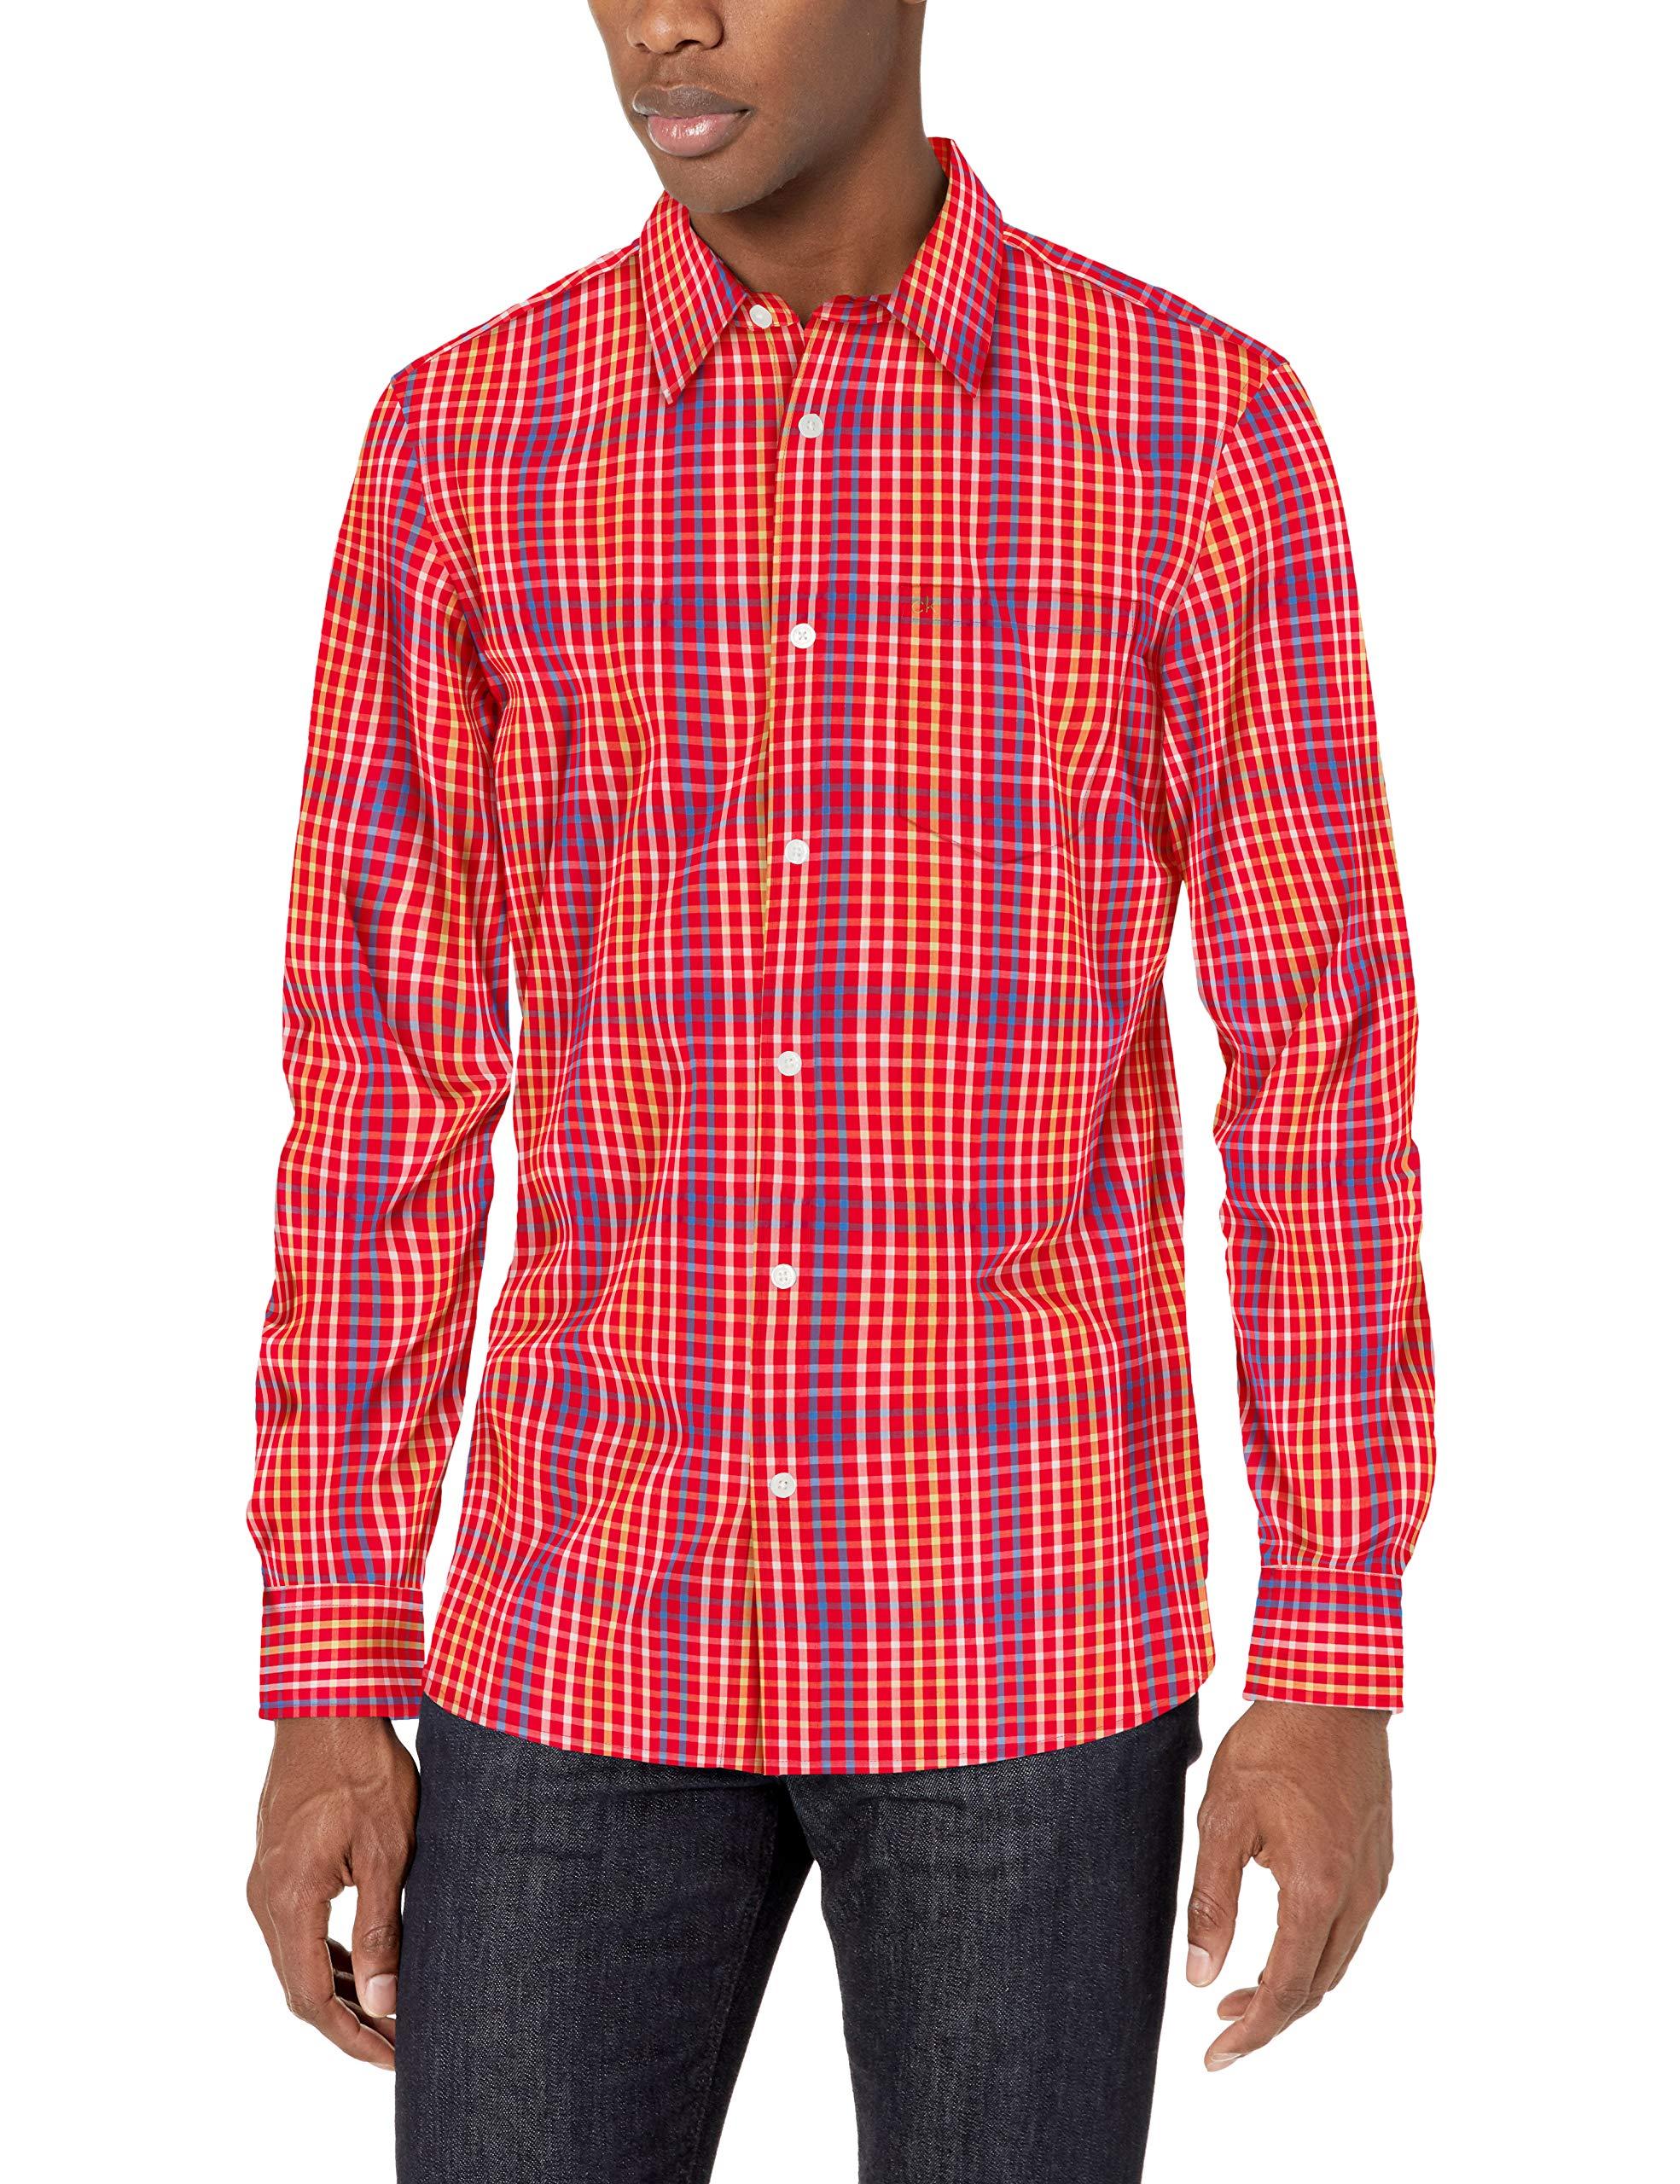 Calvin Klein Extra Fine Cotton Button Down Shirt in Red for Men - Lyst